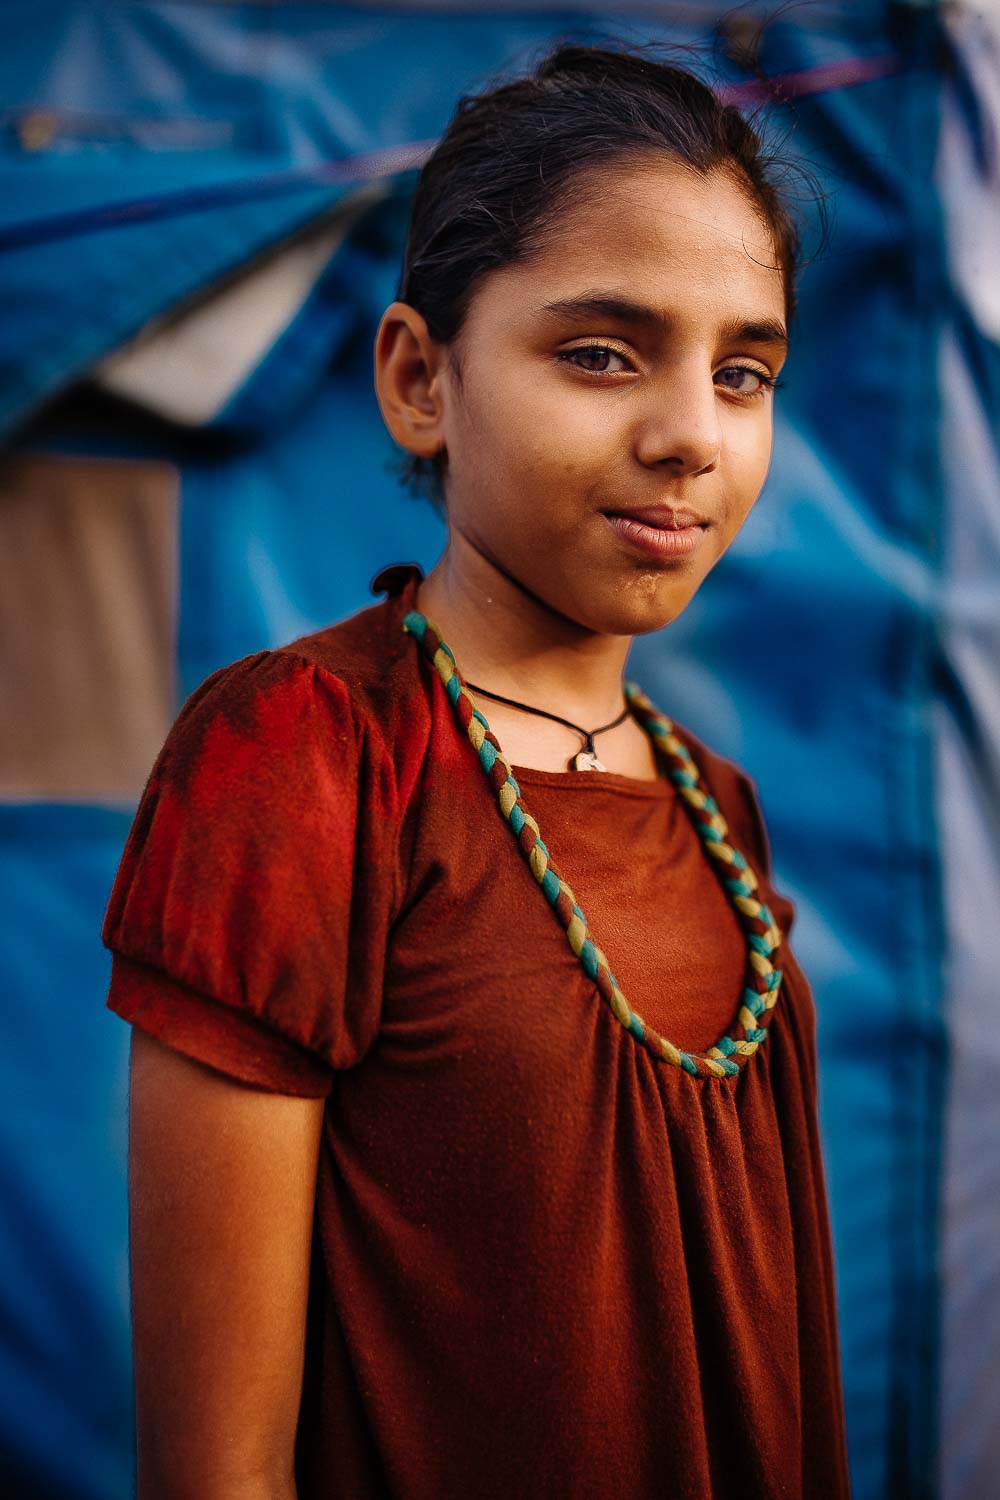 Nepalese Refugee girl - Travel photojournalism